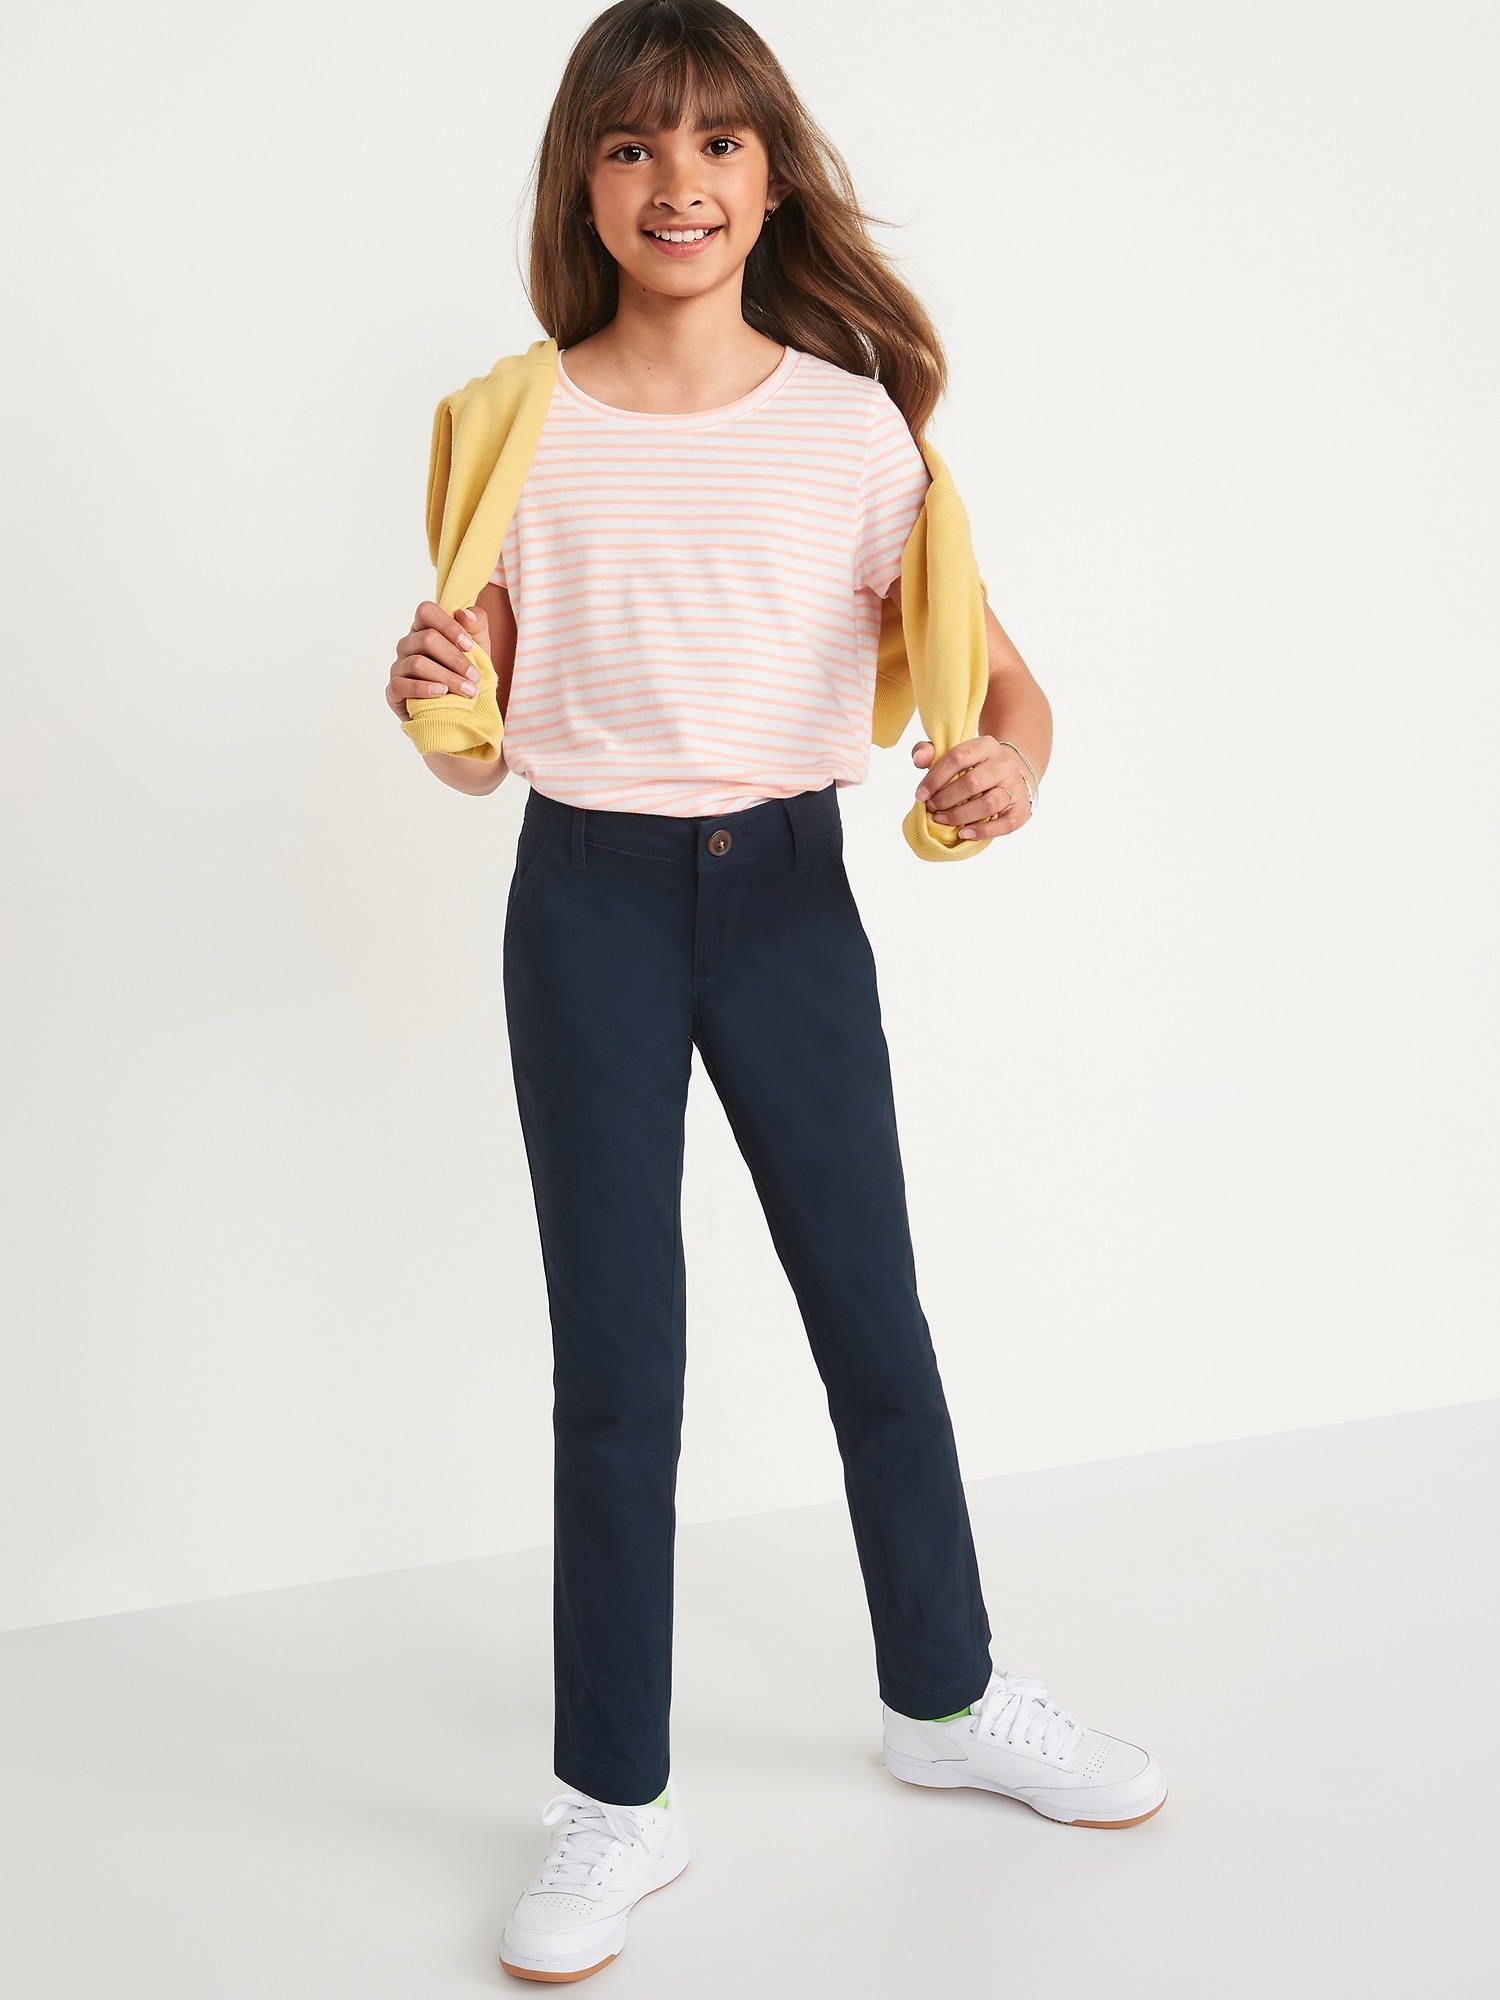 Beverly Hills Polo Club Girls School Uniform Pants  Comfort Stretch Skinny  Fit Khaki  Navy Pants 416  Walmartcom